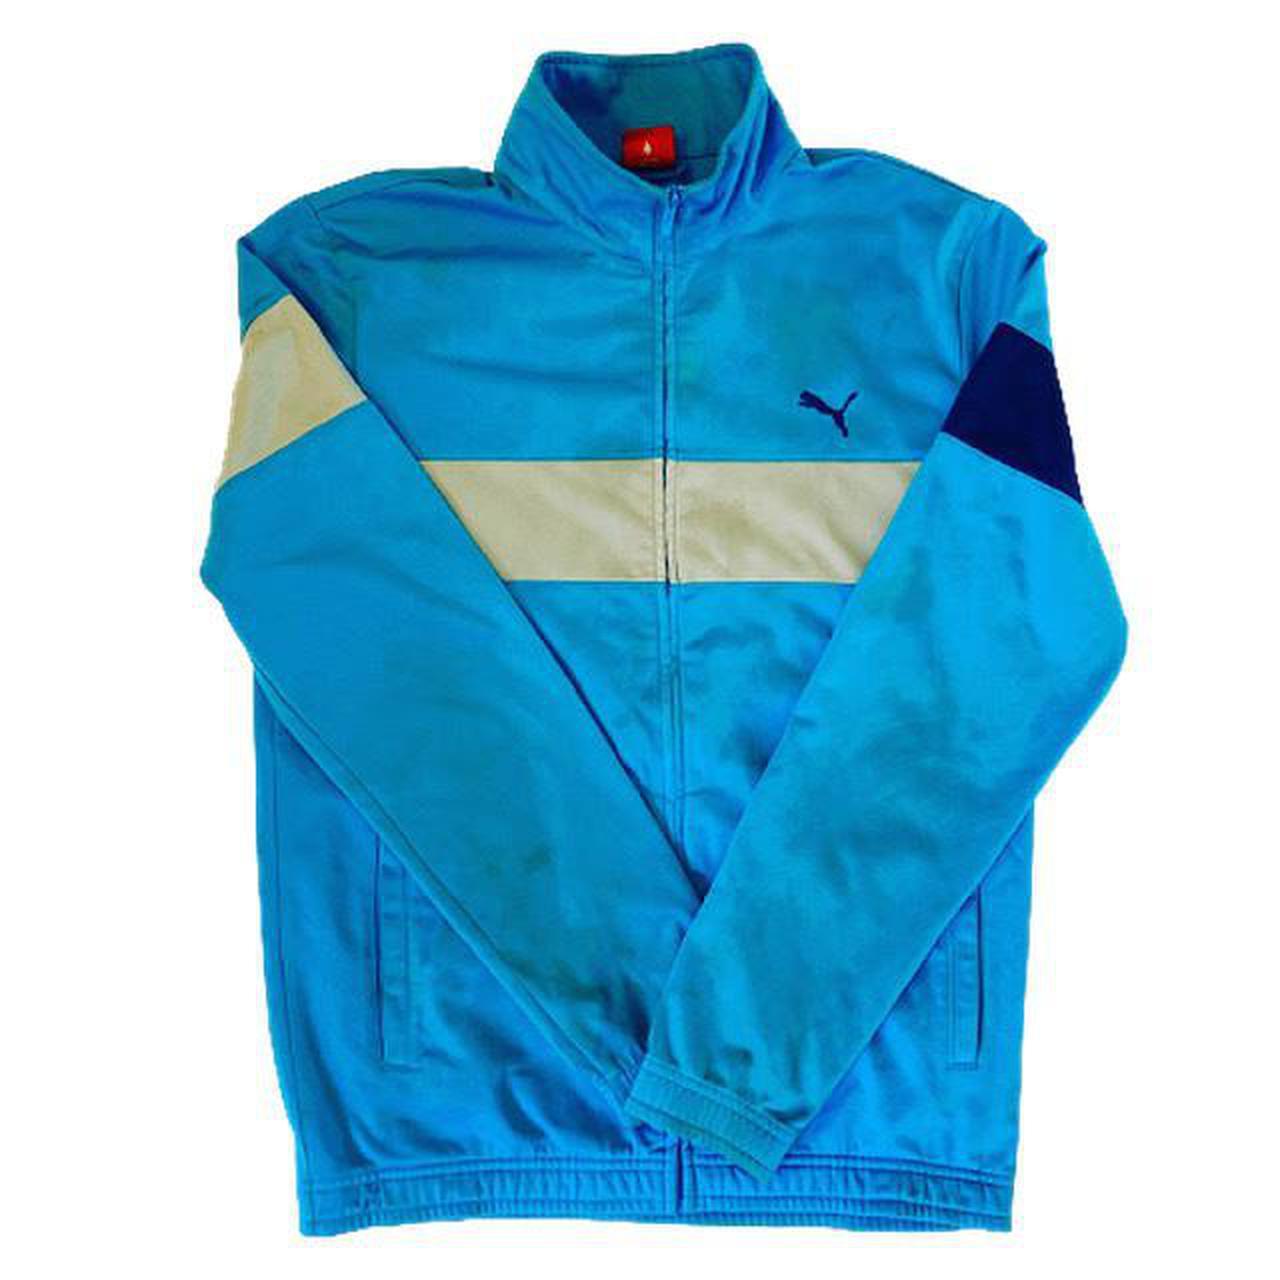 Vintage Puma Track Jacket in blue. Retro 90s Garm.... - Depop